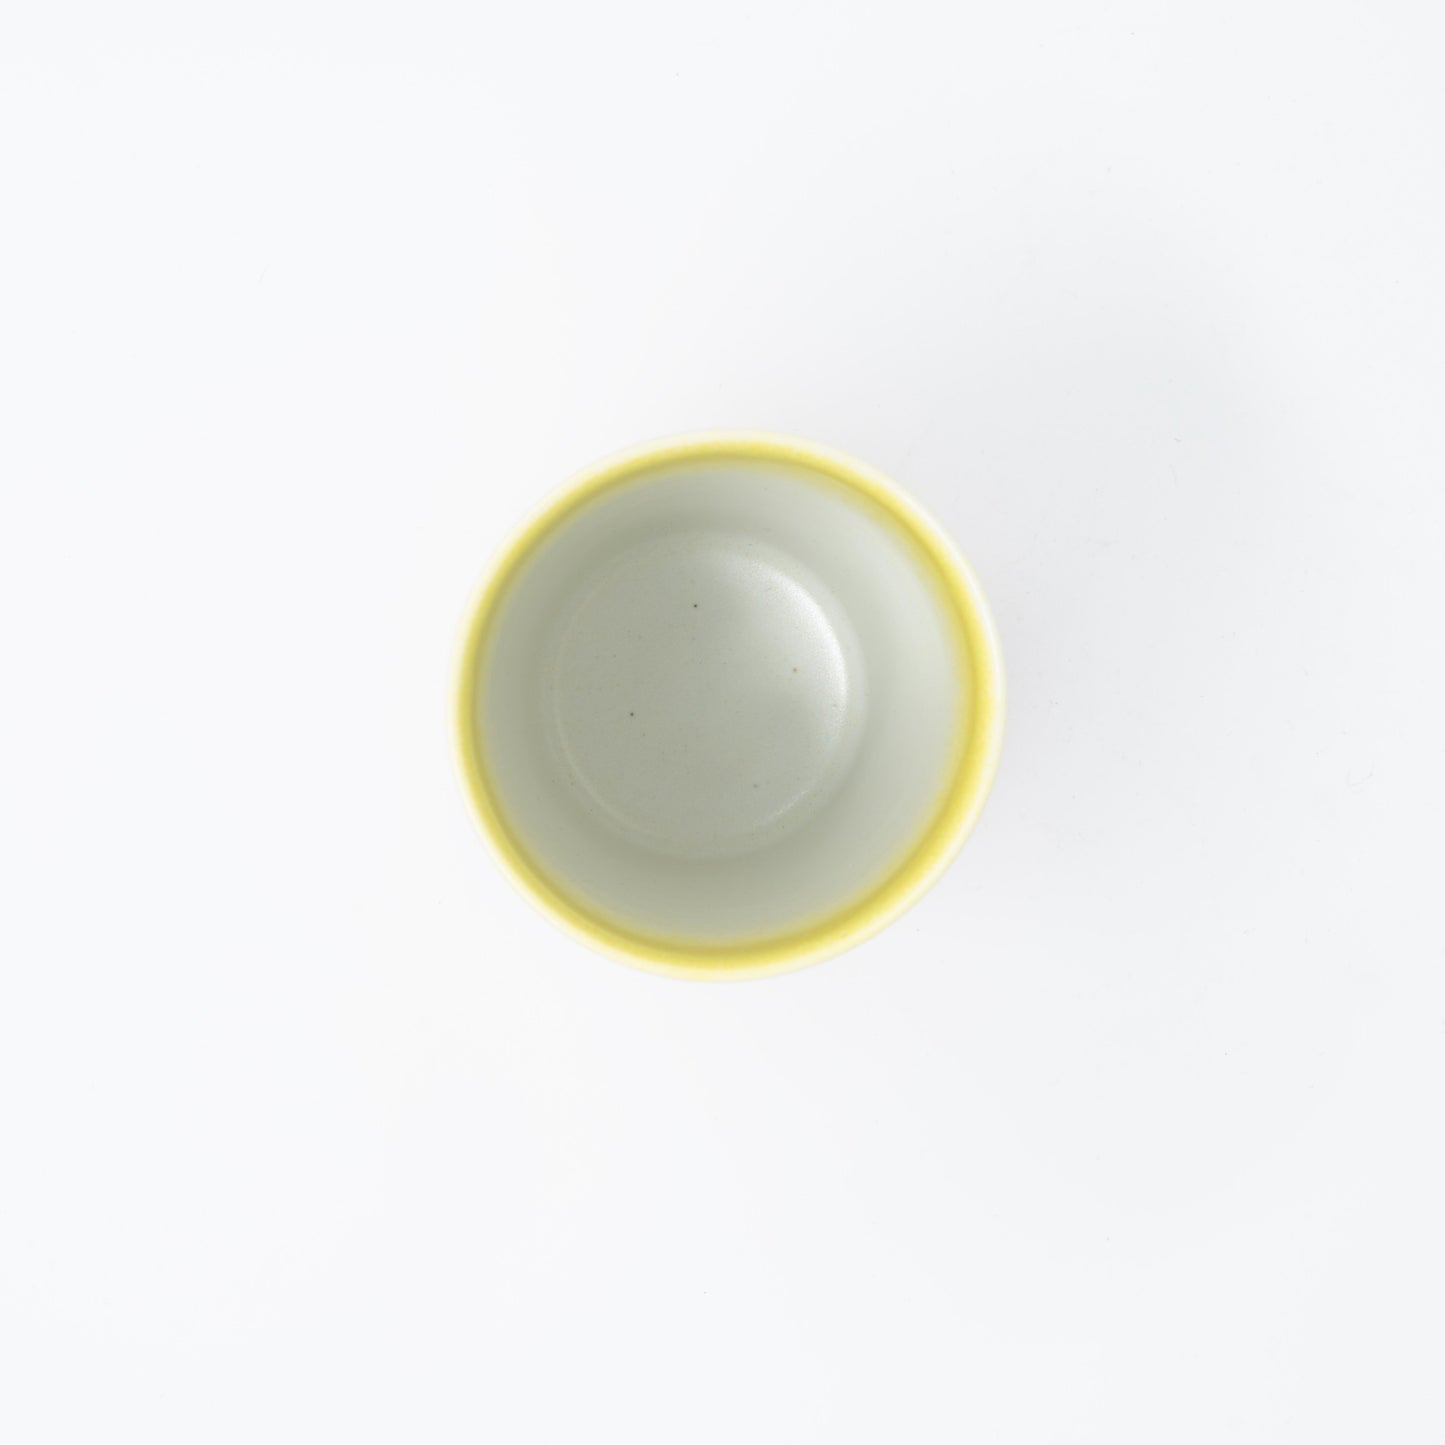 Sushi mug yellow to organge fade